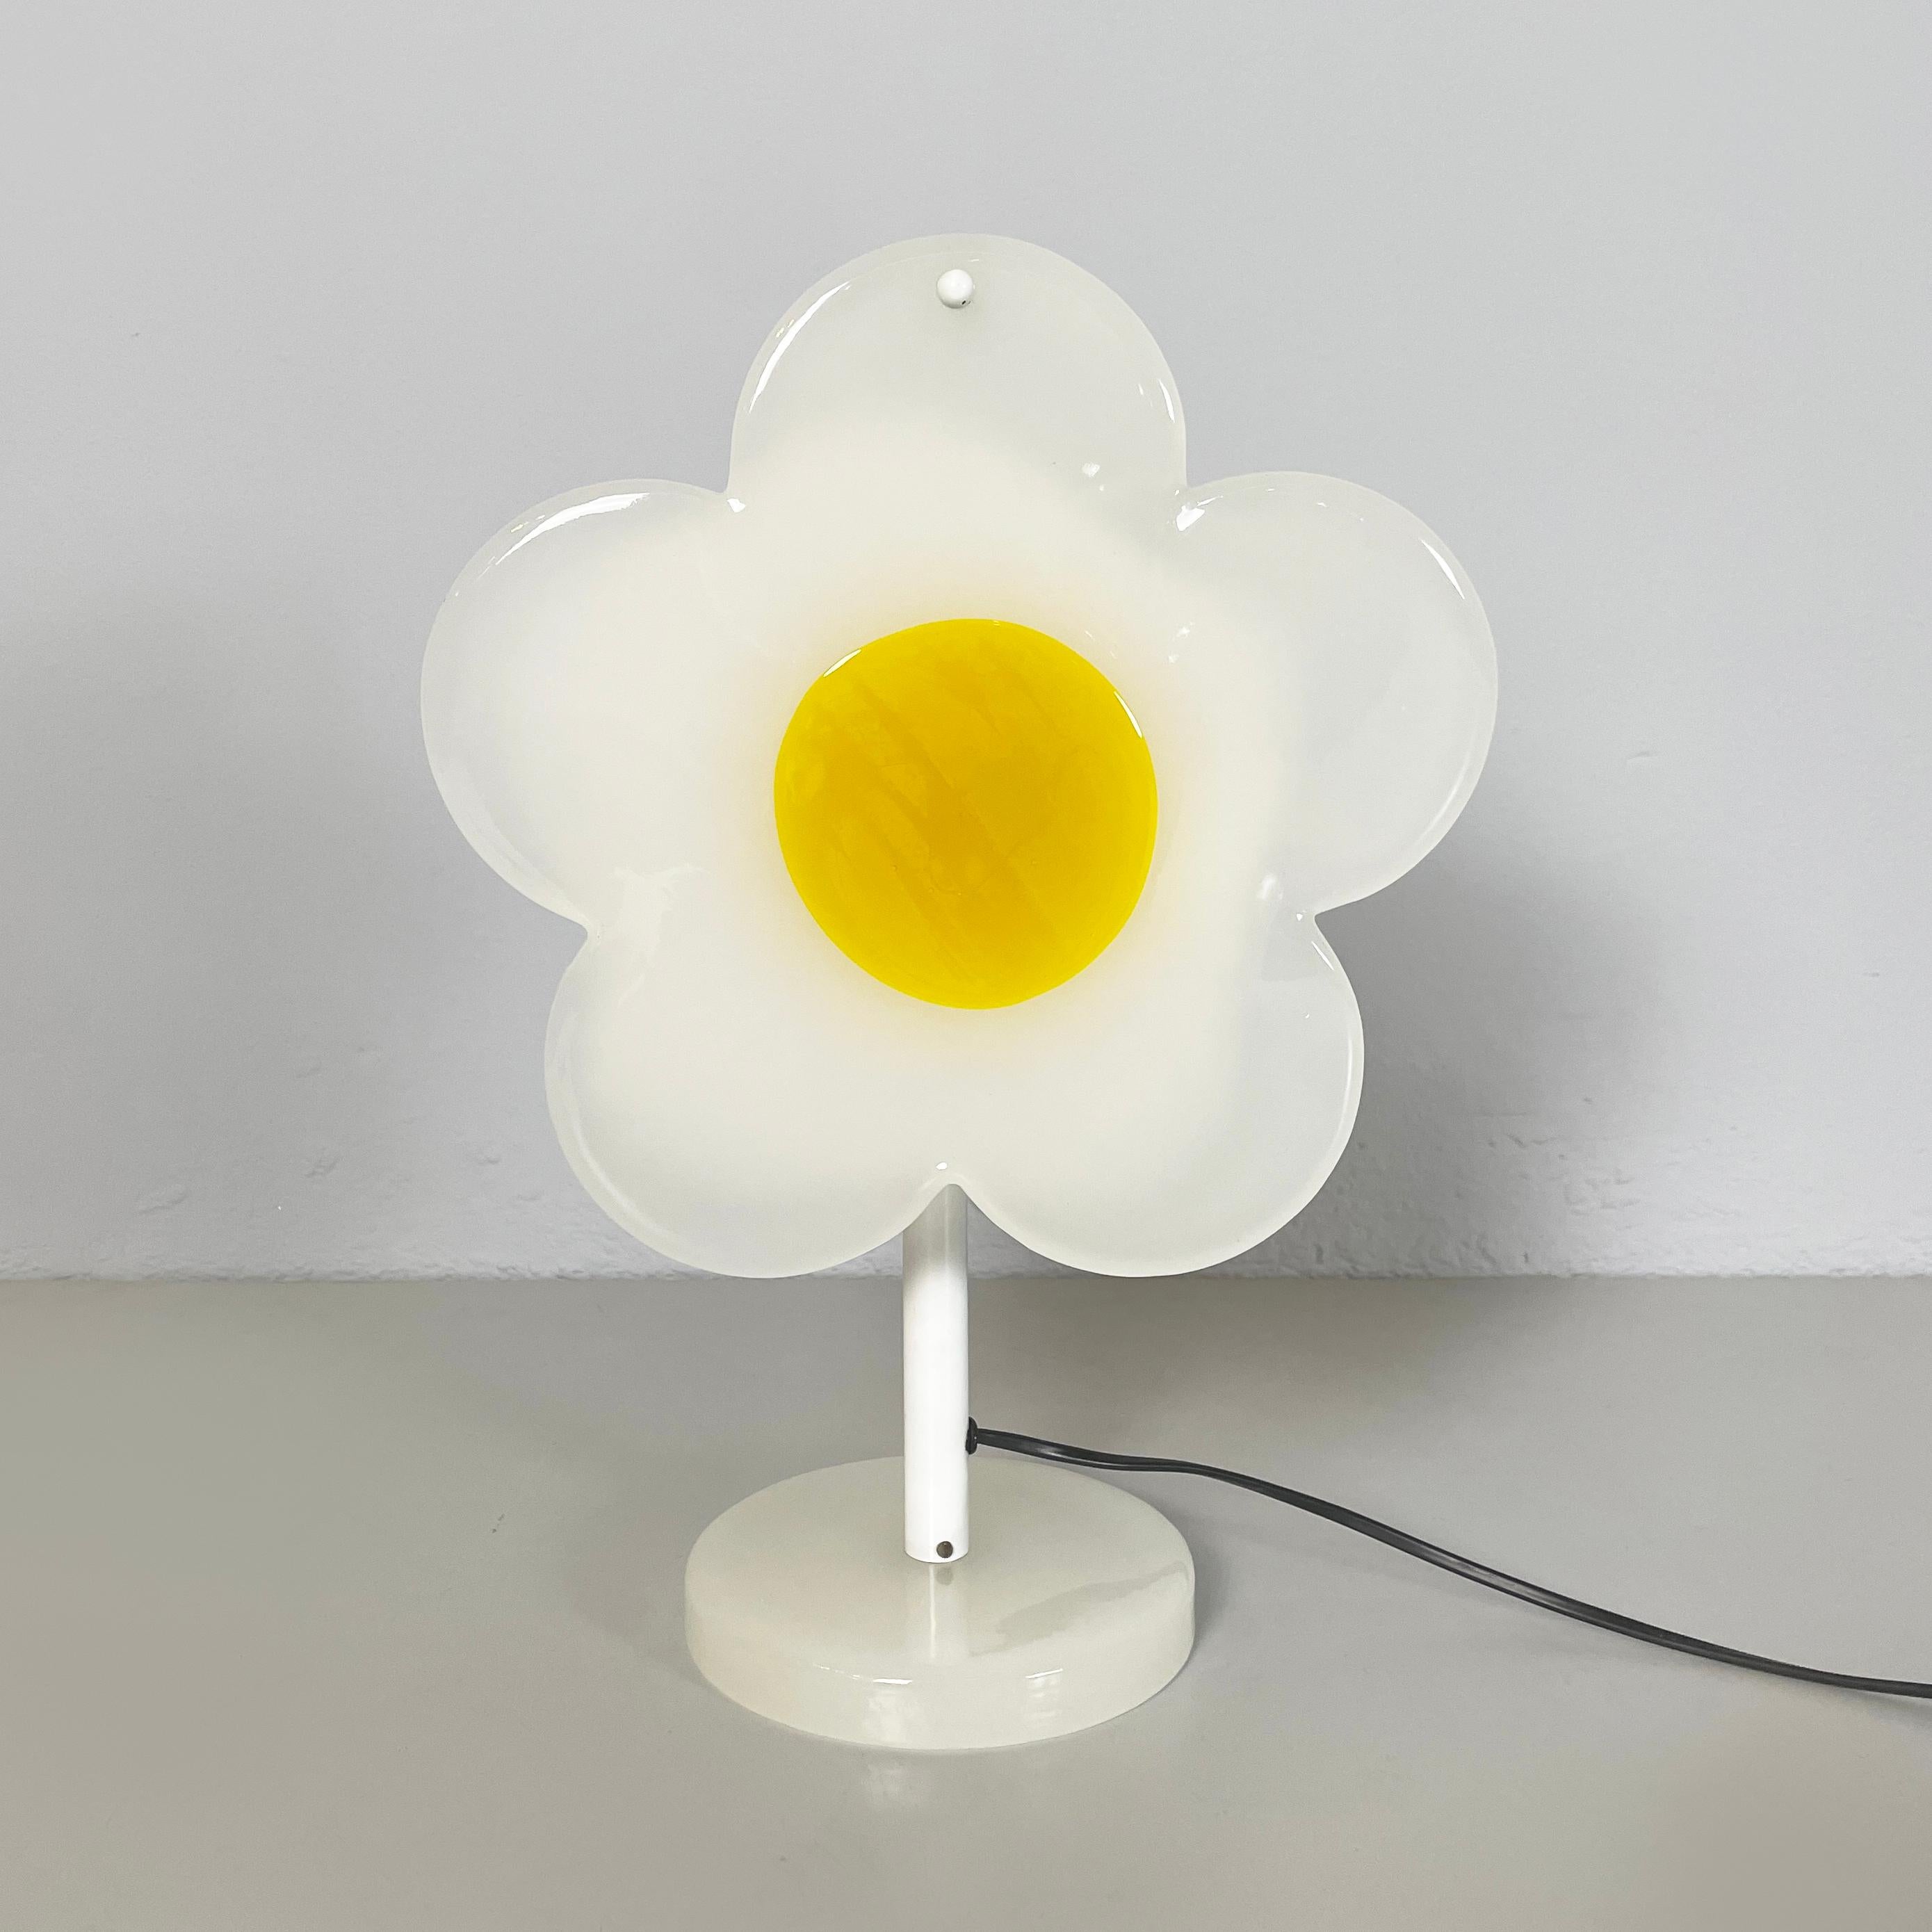 Modern Italian modern glass table lamp Fiore  in daisy flower shape by Paf Studio 1980s